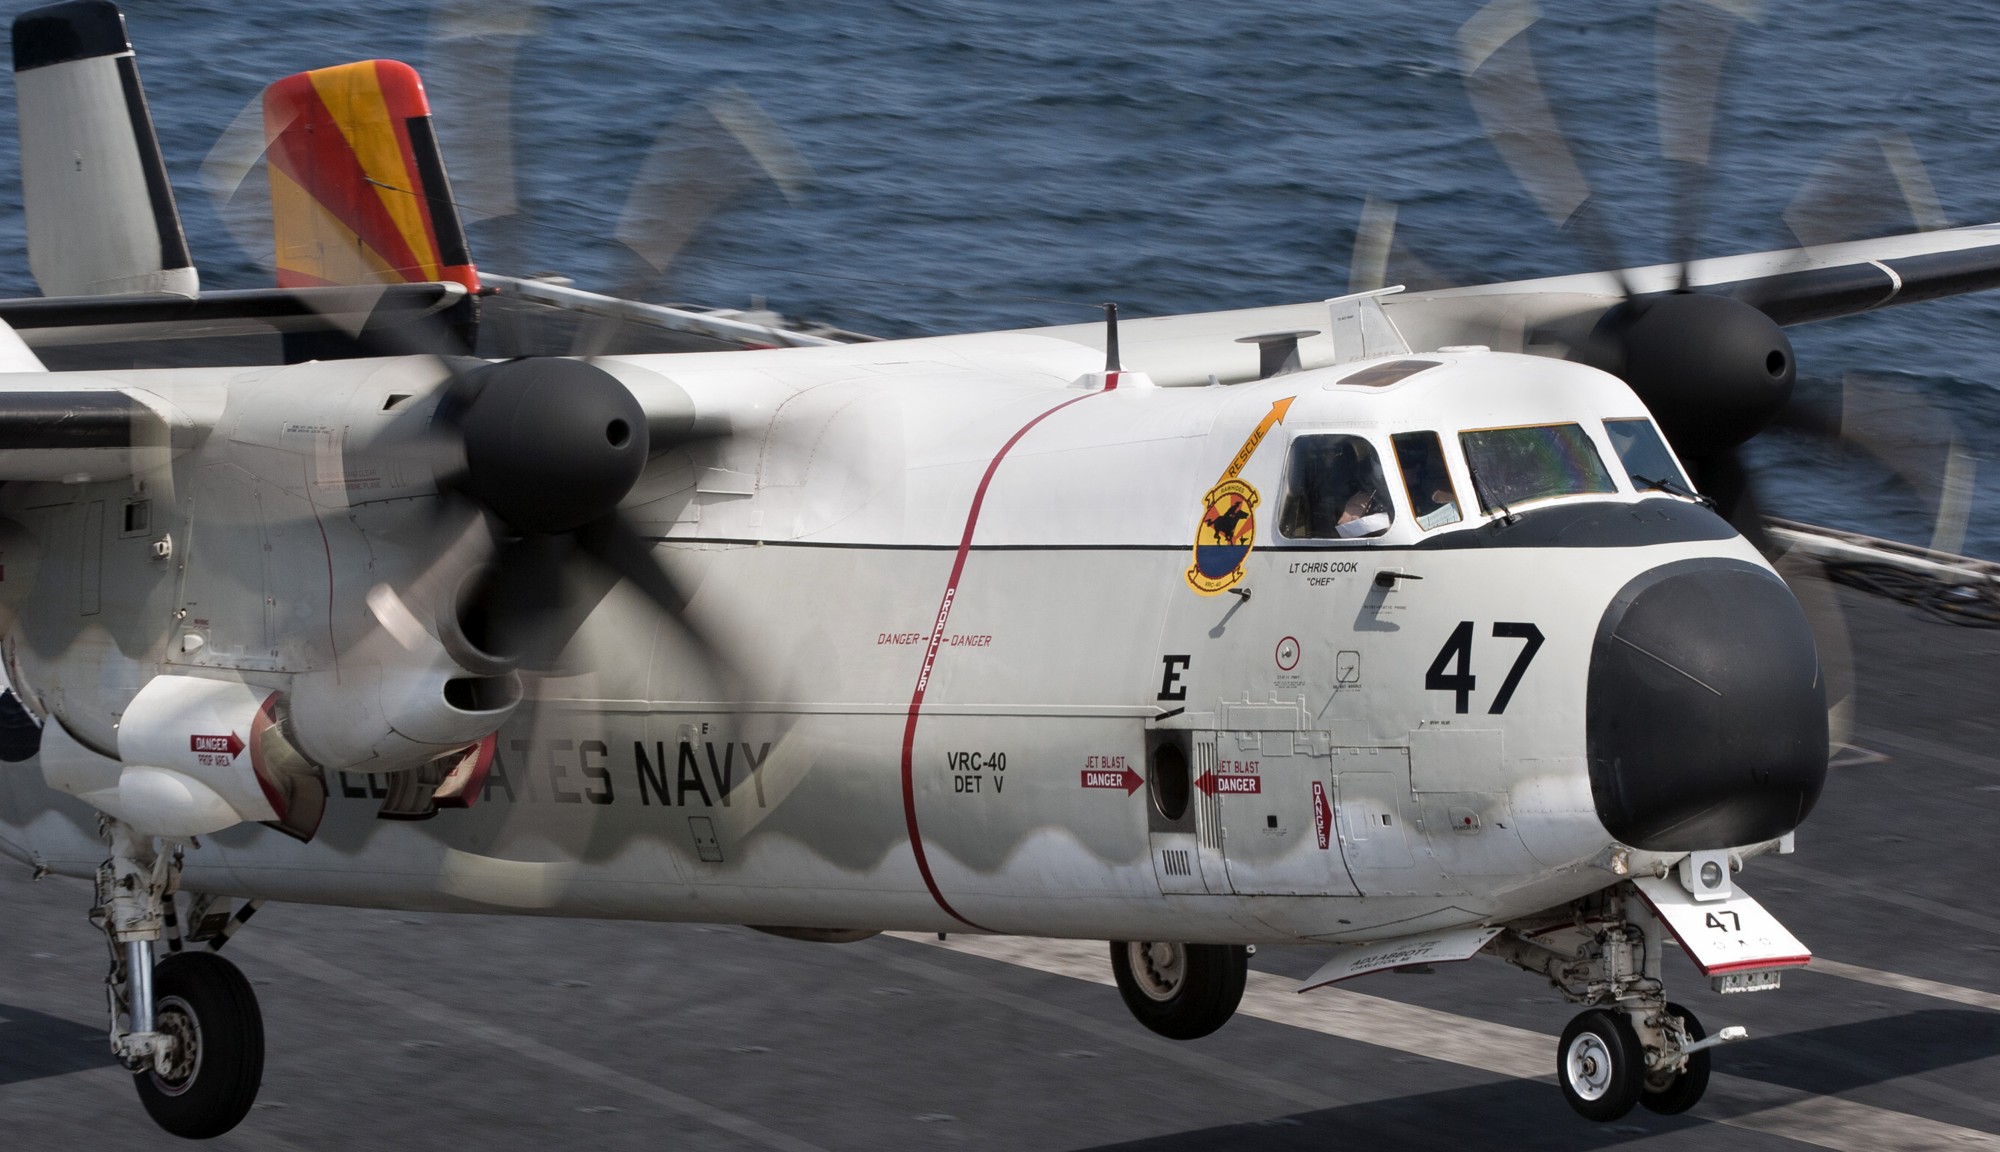 vrc-40 rawhides fleet logistics support squadron flelogsupron us navy grumman c-2a greyhound uss carl vinson cvn-70 184